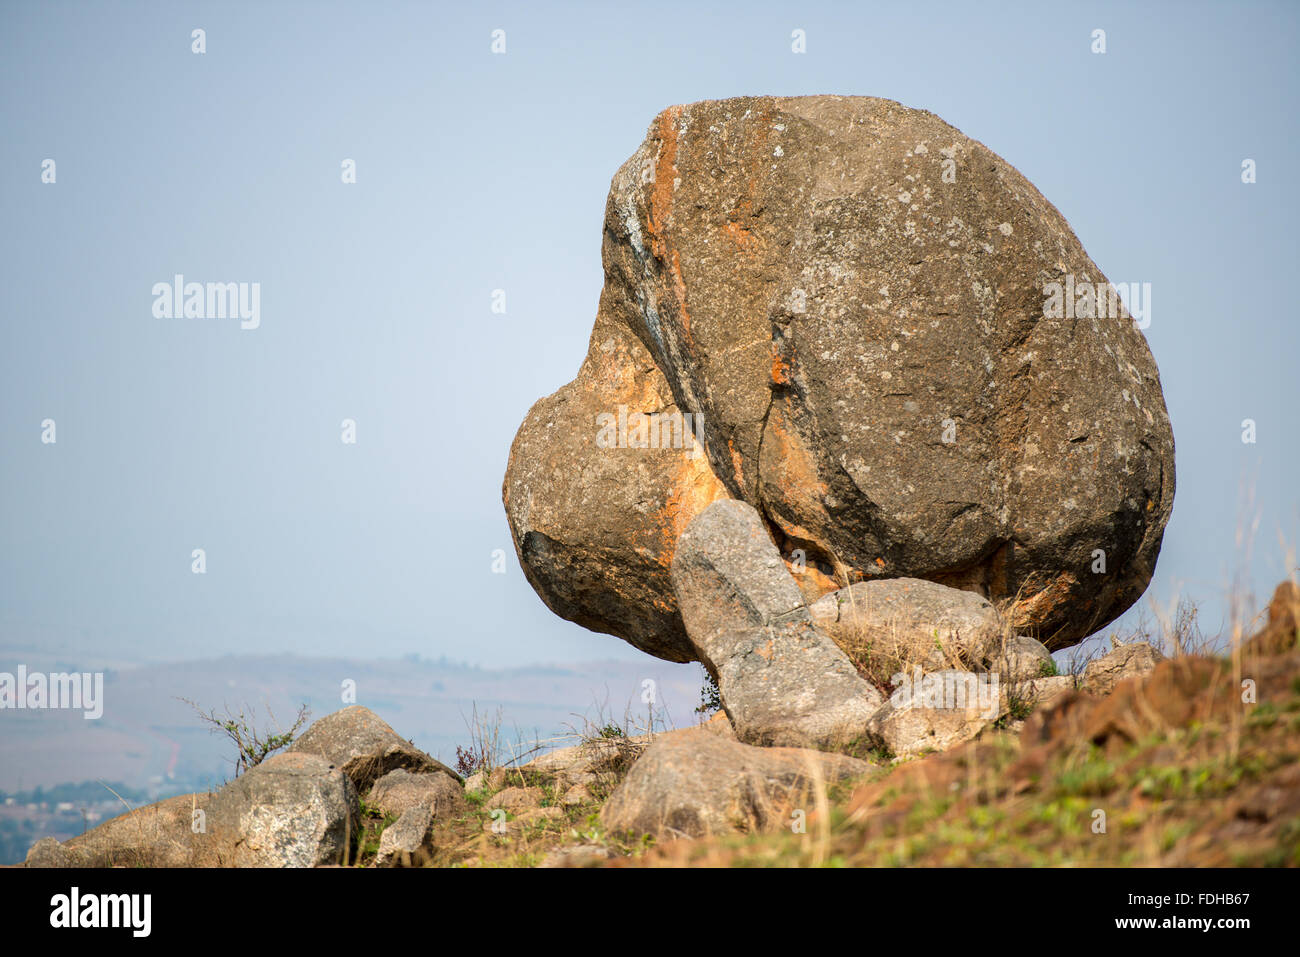 Große Felsbrocken auf einem Berg im Mlilwane Wildlife Sanctuary in Swasiland, Afrika. Stockfoto